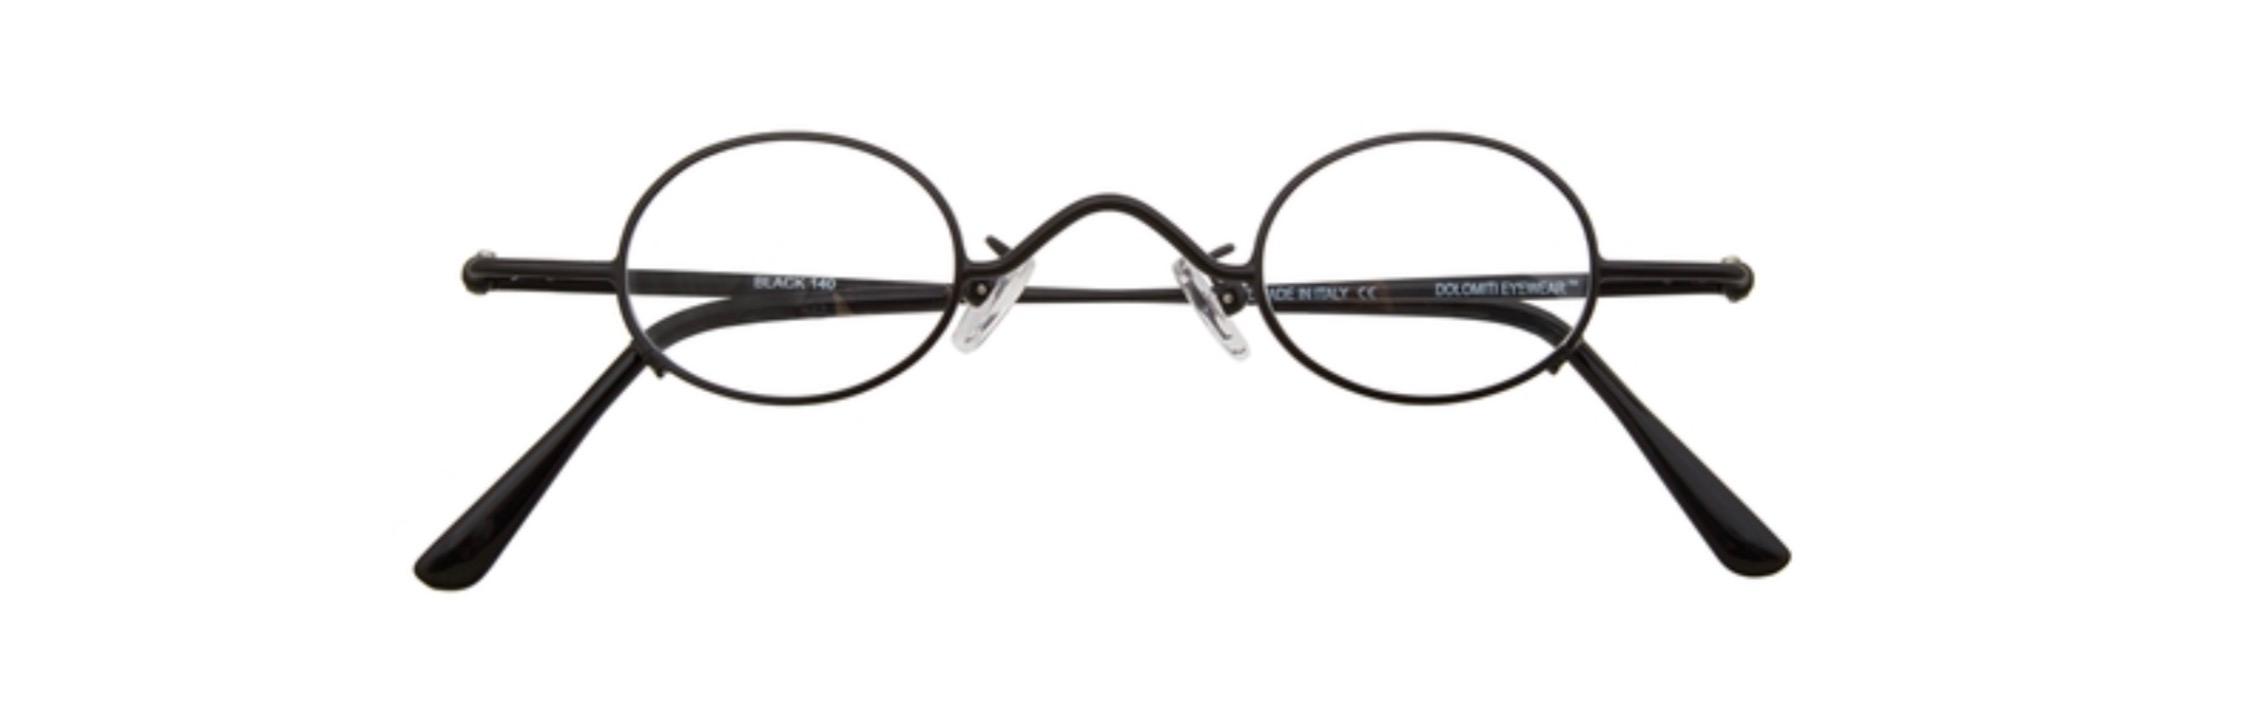 Small Glasses & Eyeglasses Frames | Petite & Narrow Faces